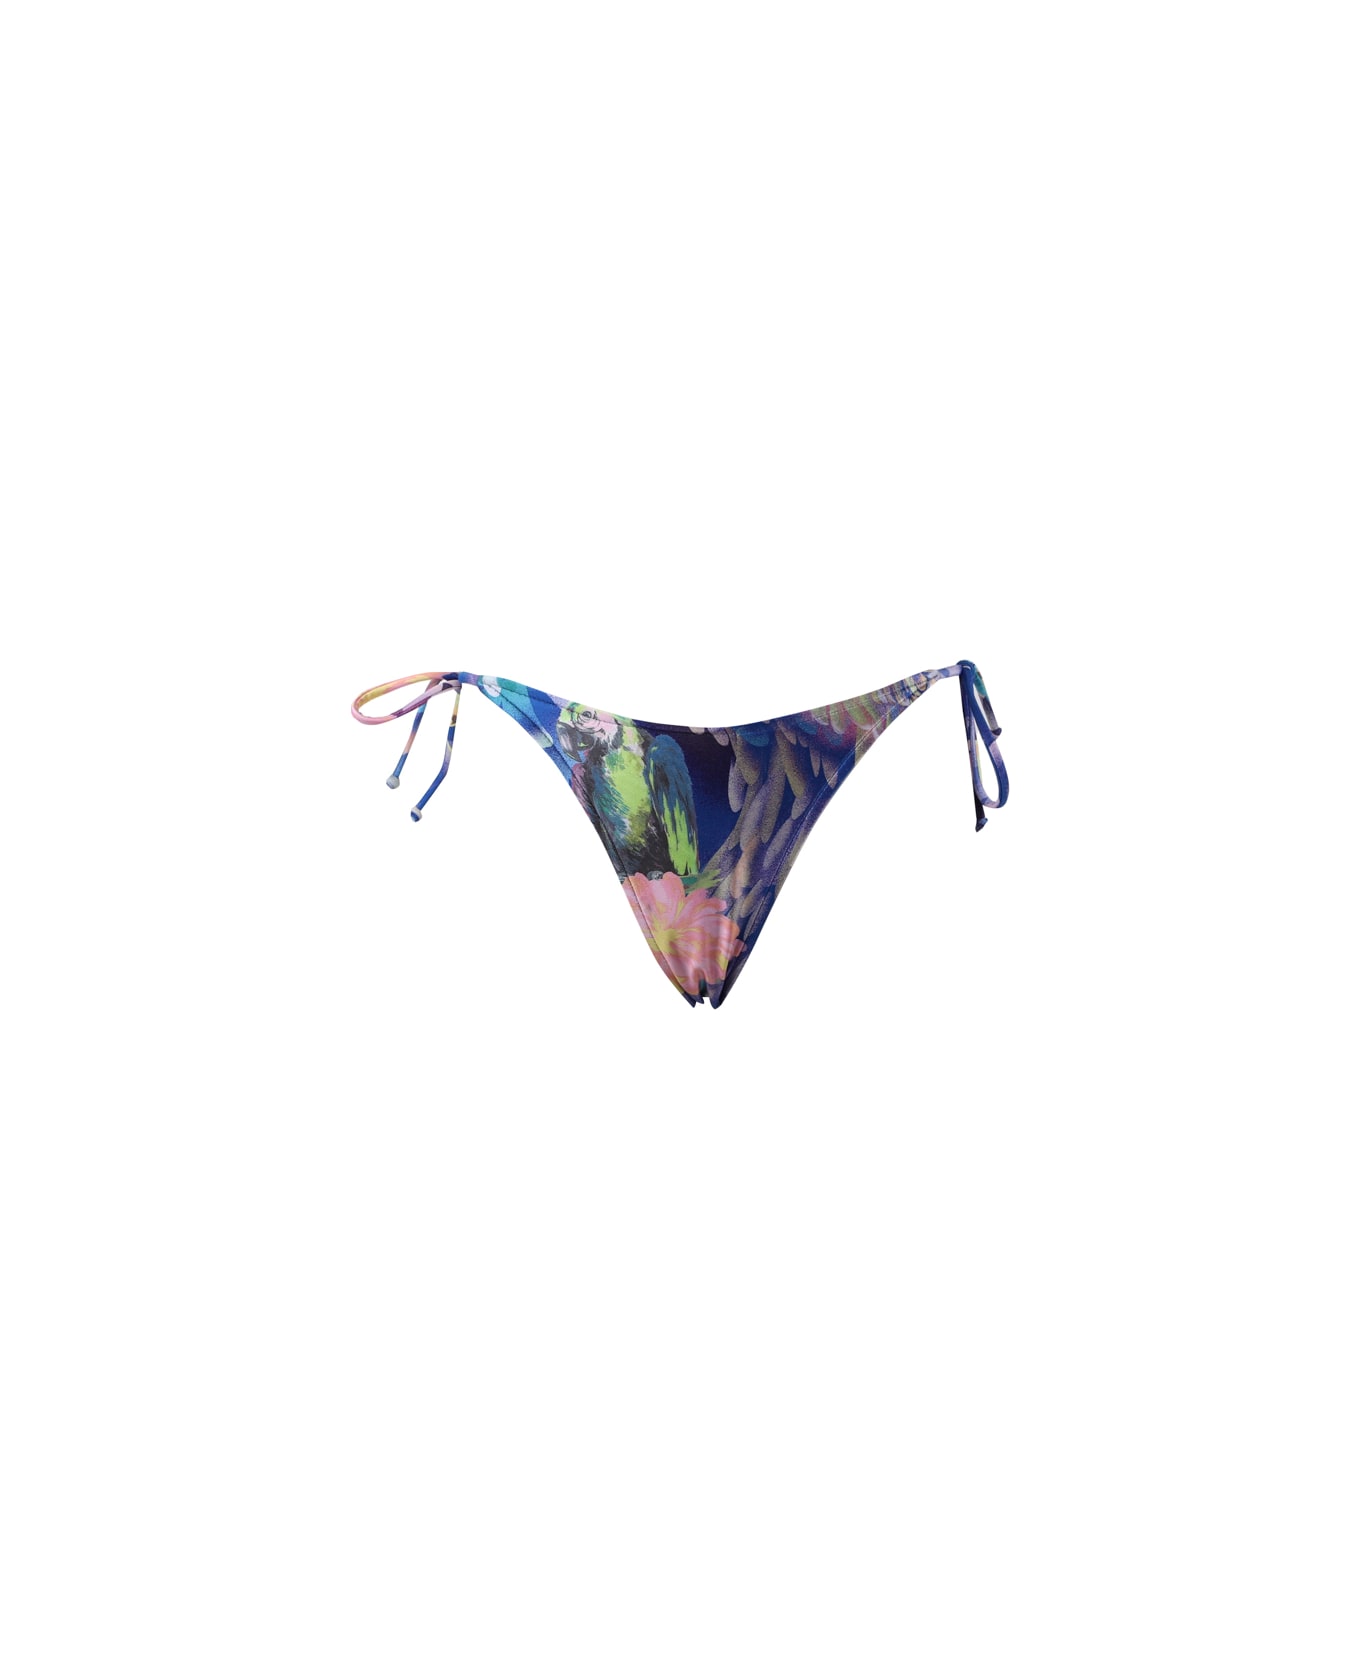 Moschino Swim Briefs Floral - Fantasy print blue